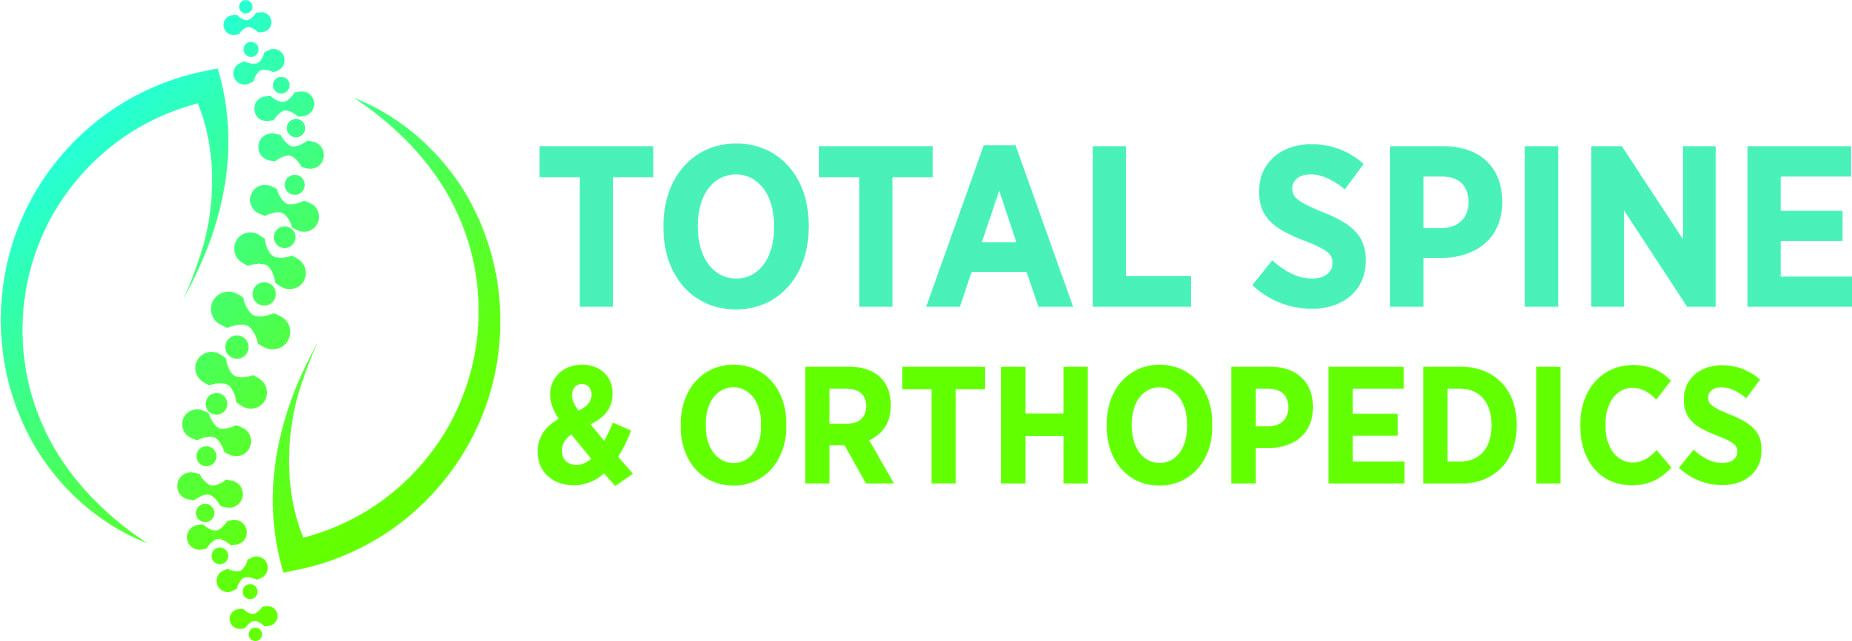 Total Spine & Orthopedics